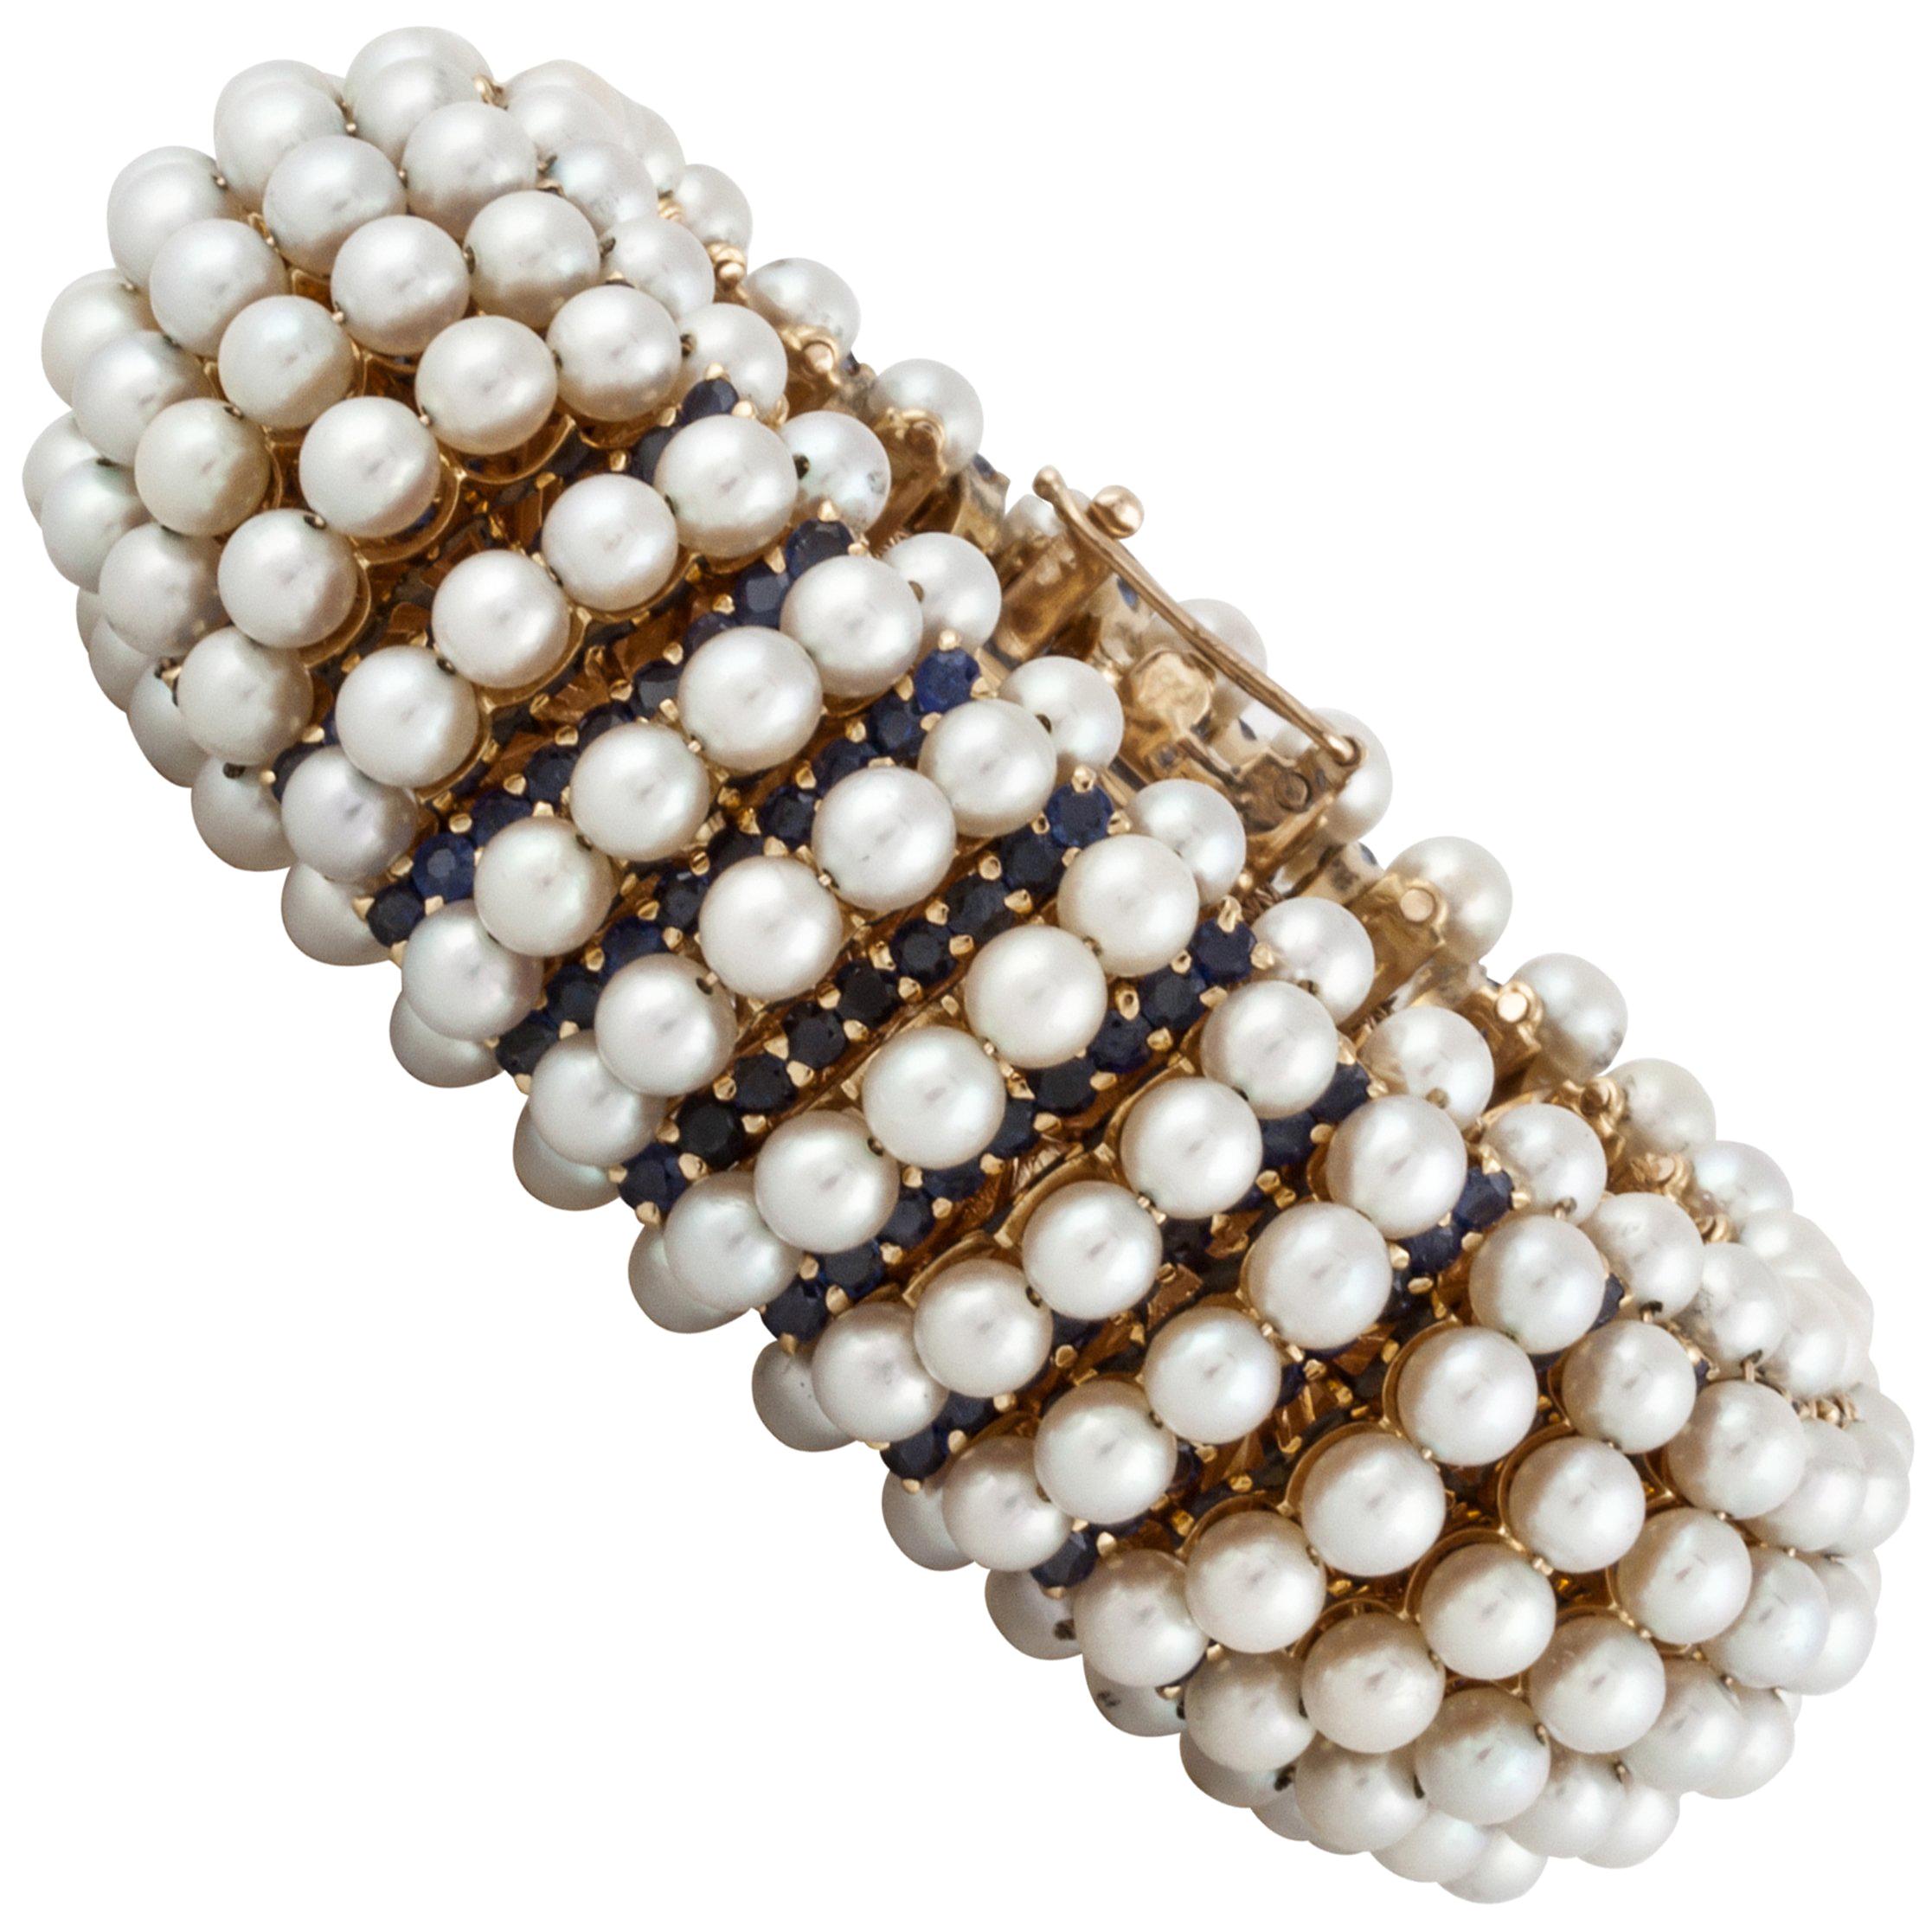 Tiffany & Co. Pearl Sapphire Gold Bracelet